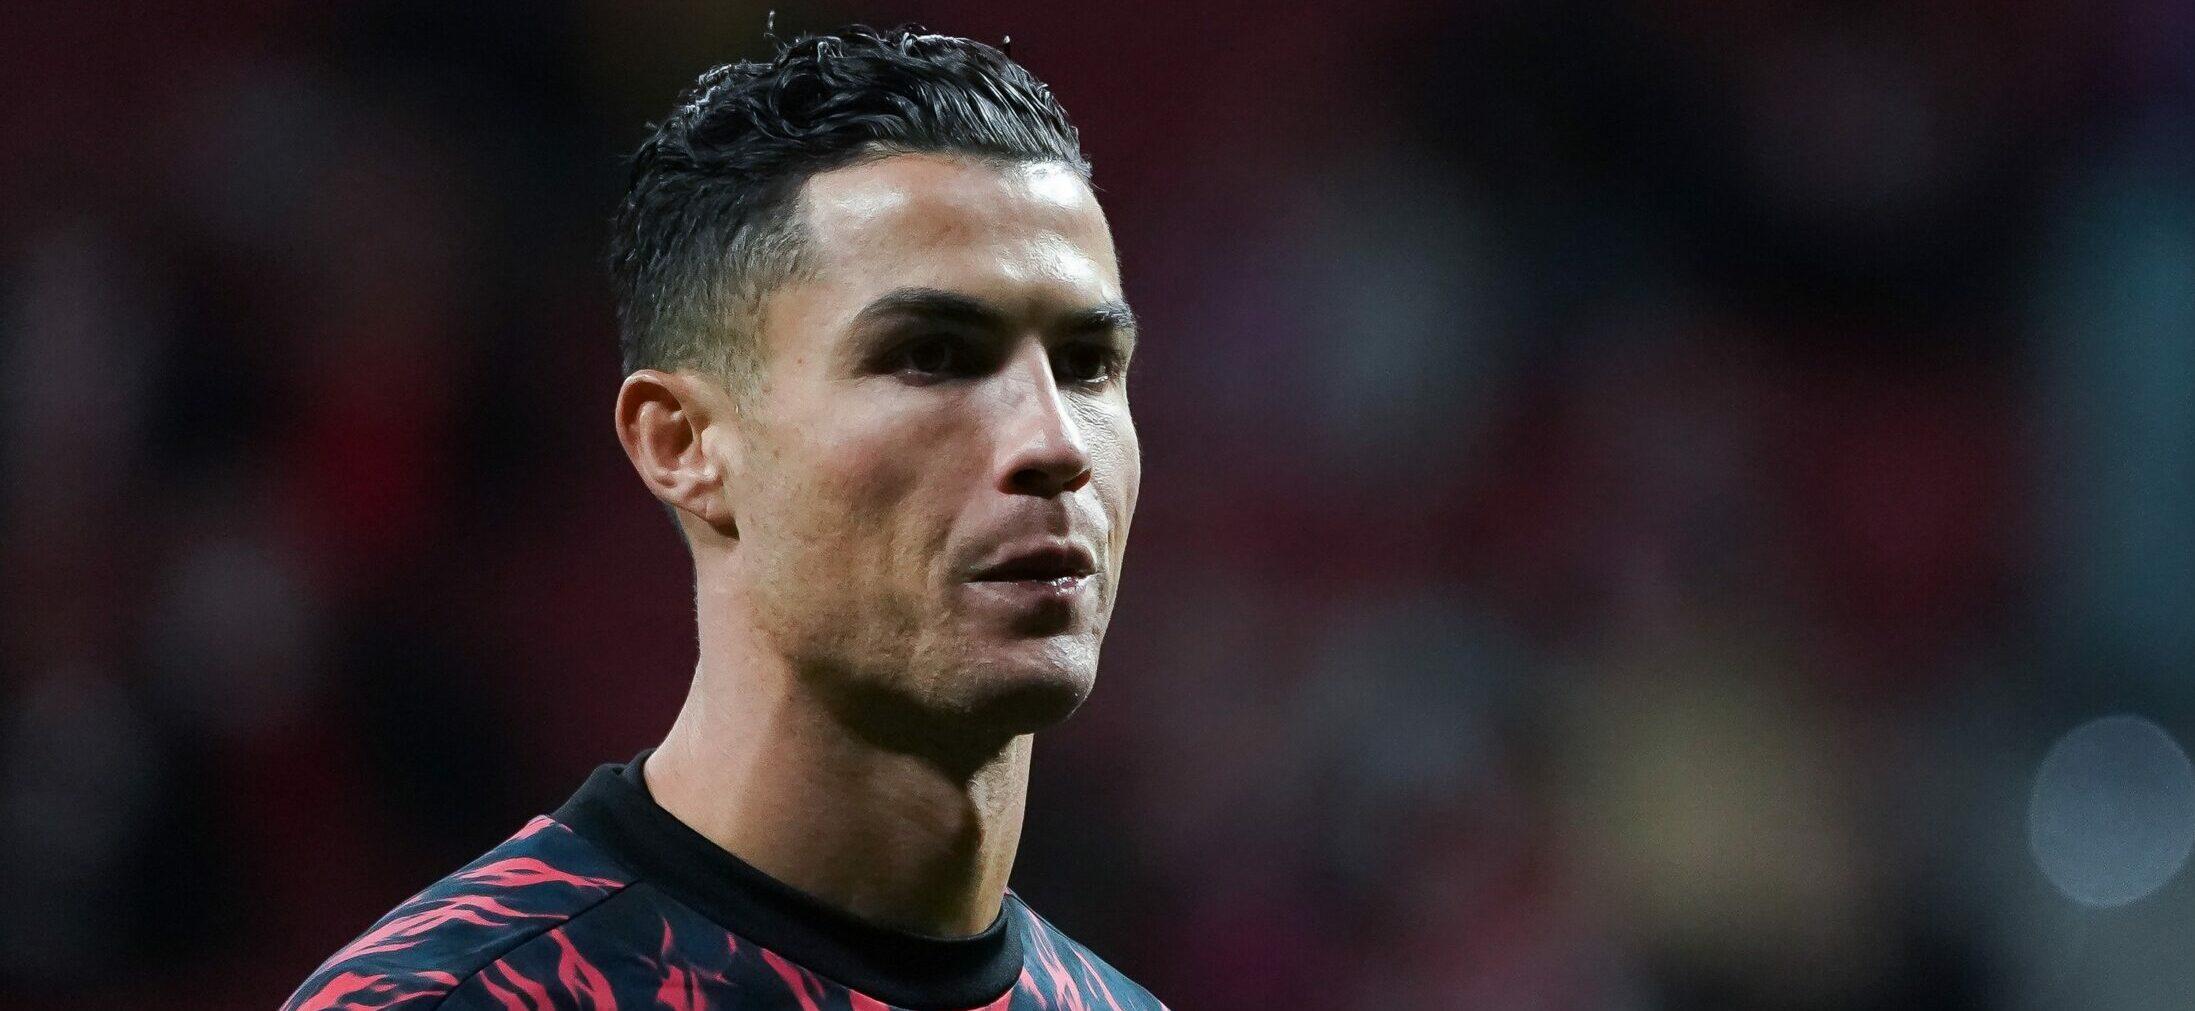 Cristiano Ronaldo of Manchester United in Madrid, Spain - 23 Feb 2022